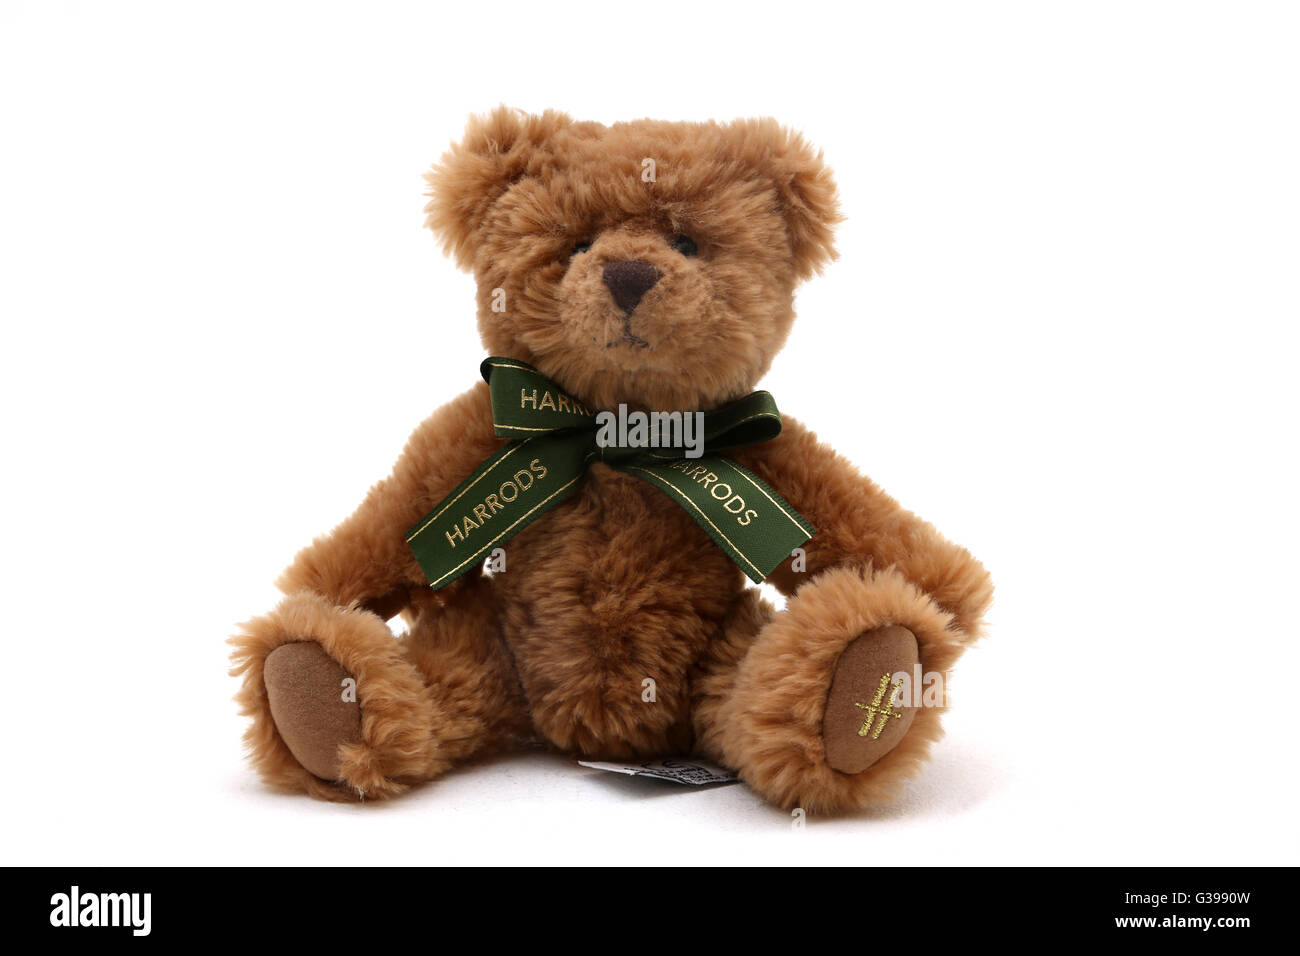 Harrods Teddy Bear Stock Photo